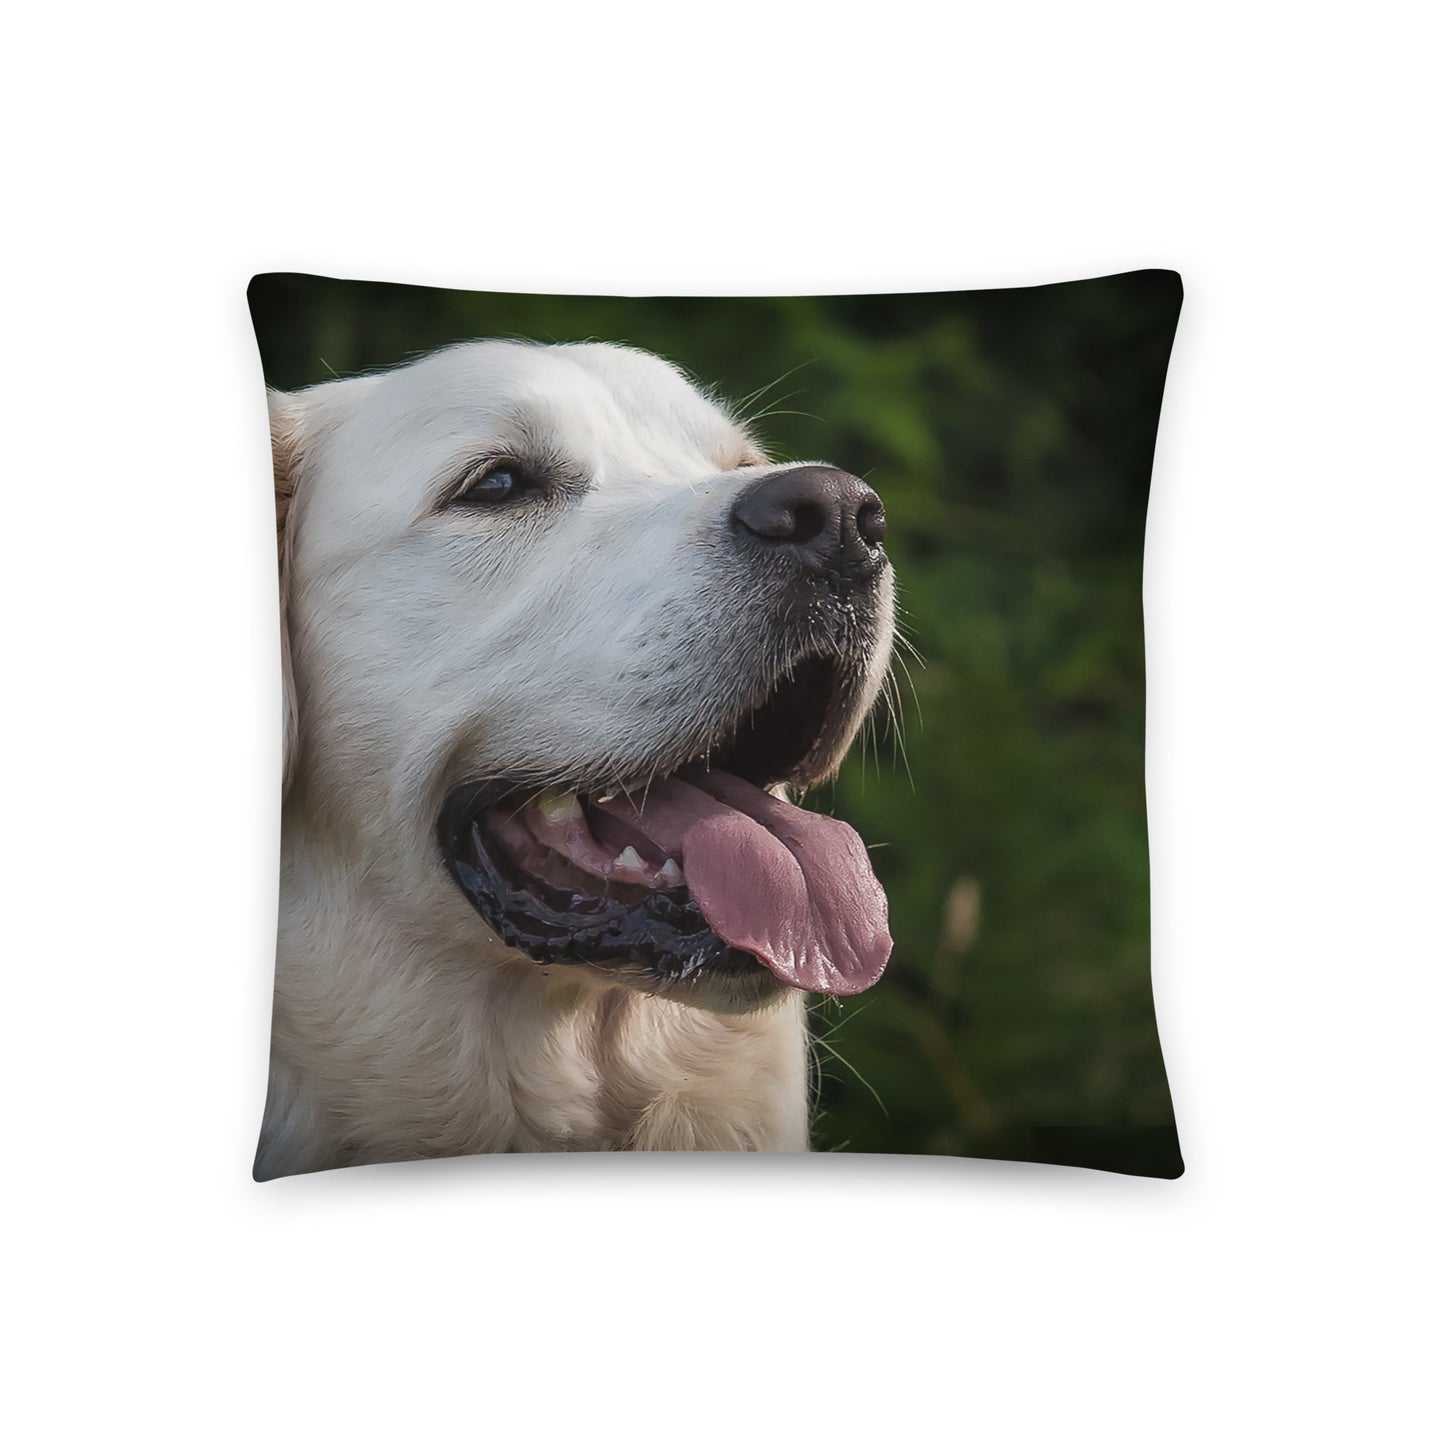 A Soft Throw Pillow Printed with a Labrador